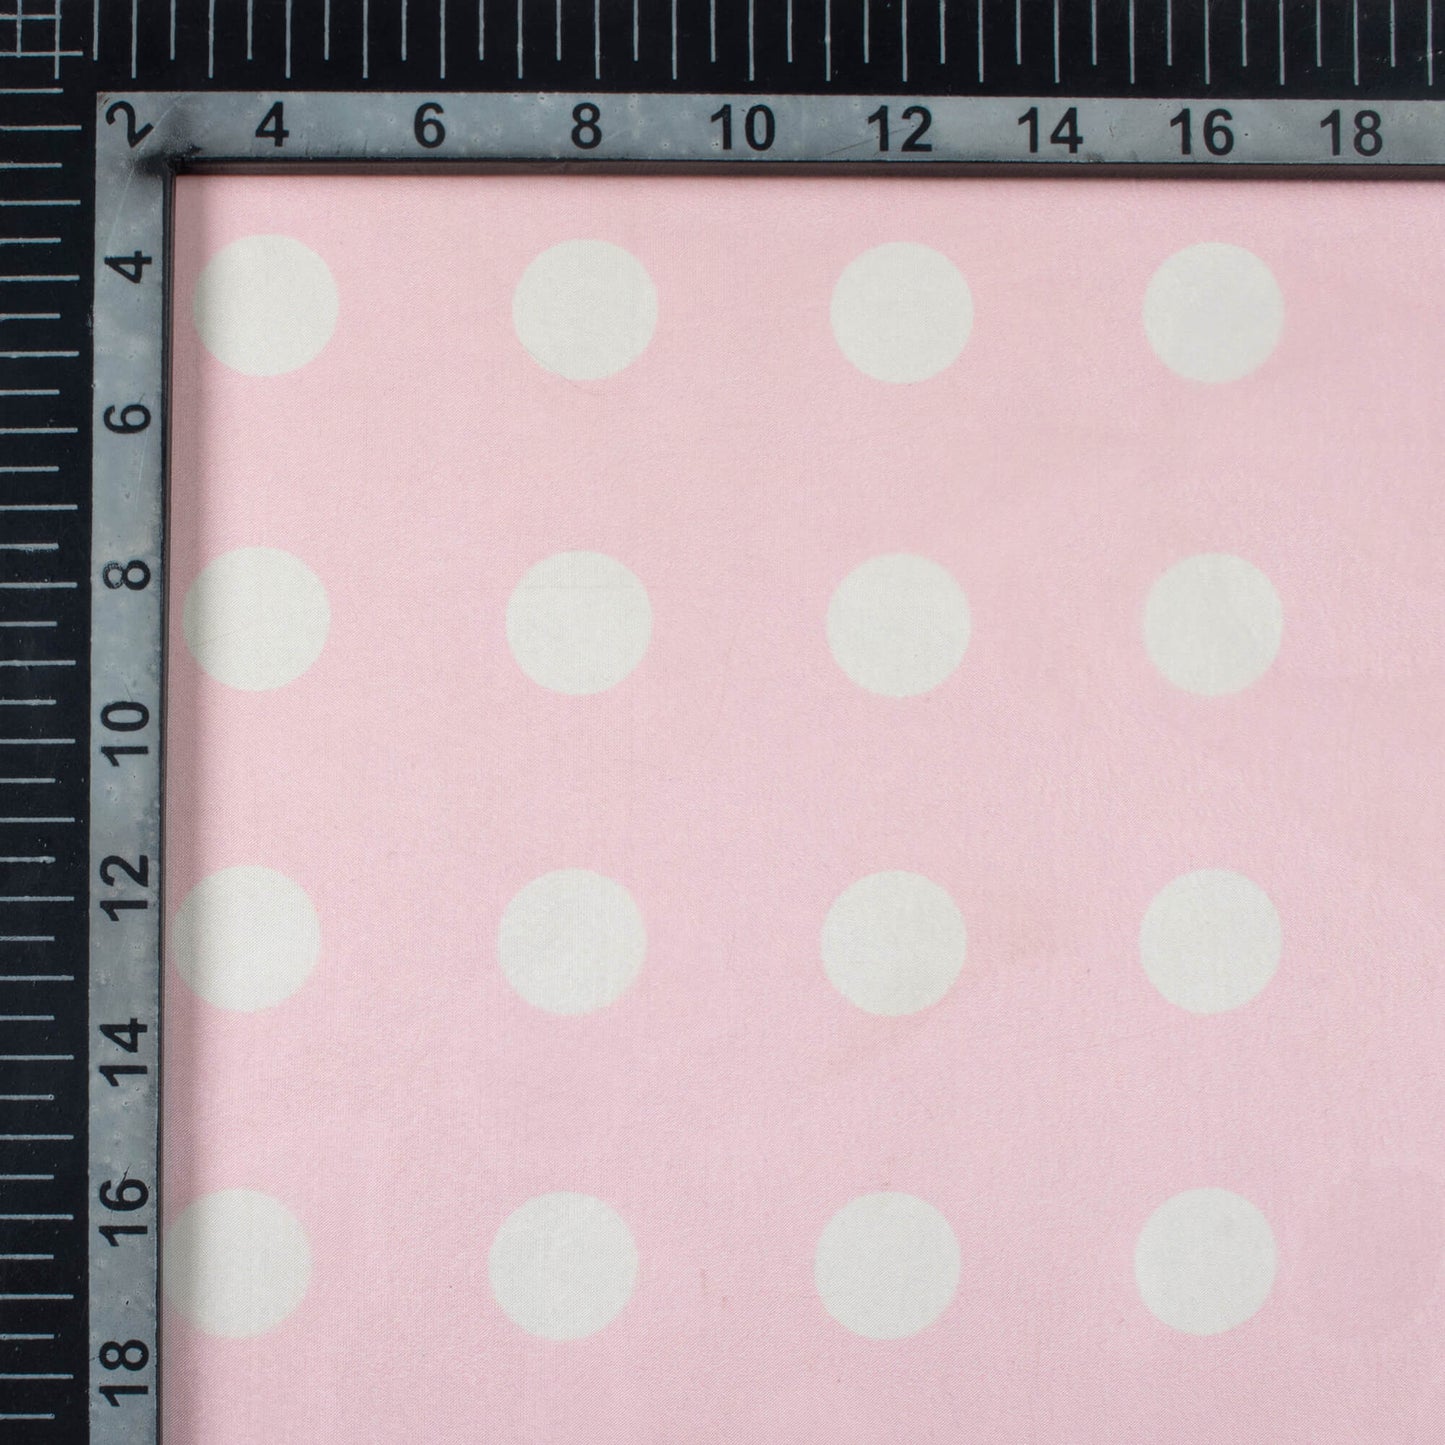 Pale Pink And White Polka Dots Pattern Digital Print Organza Satin Fabric